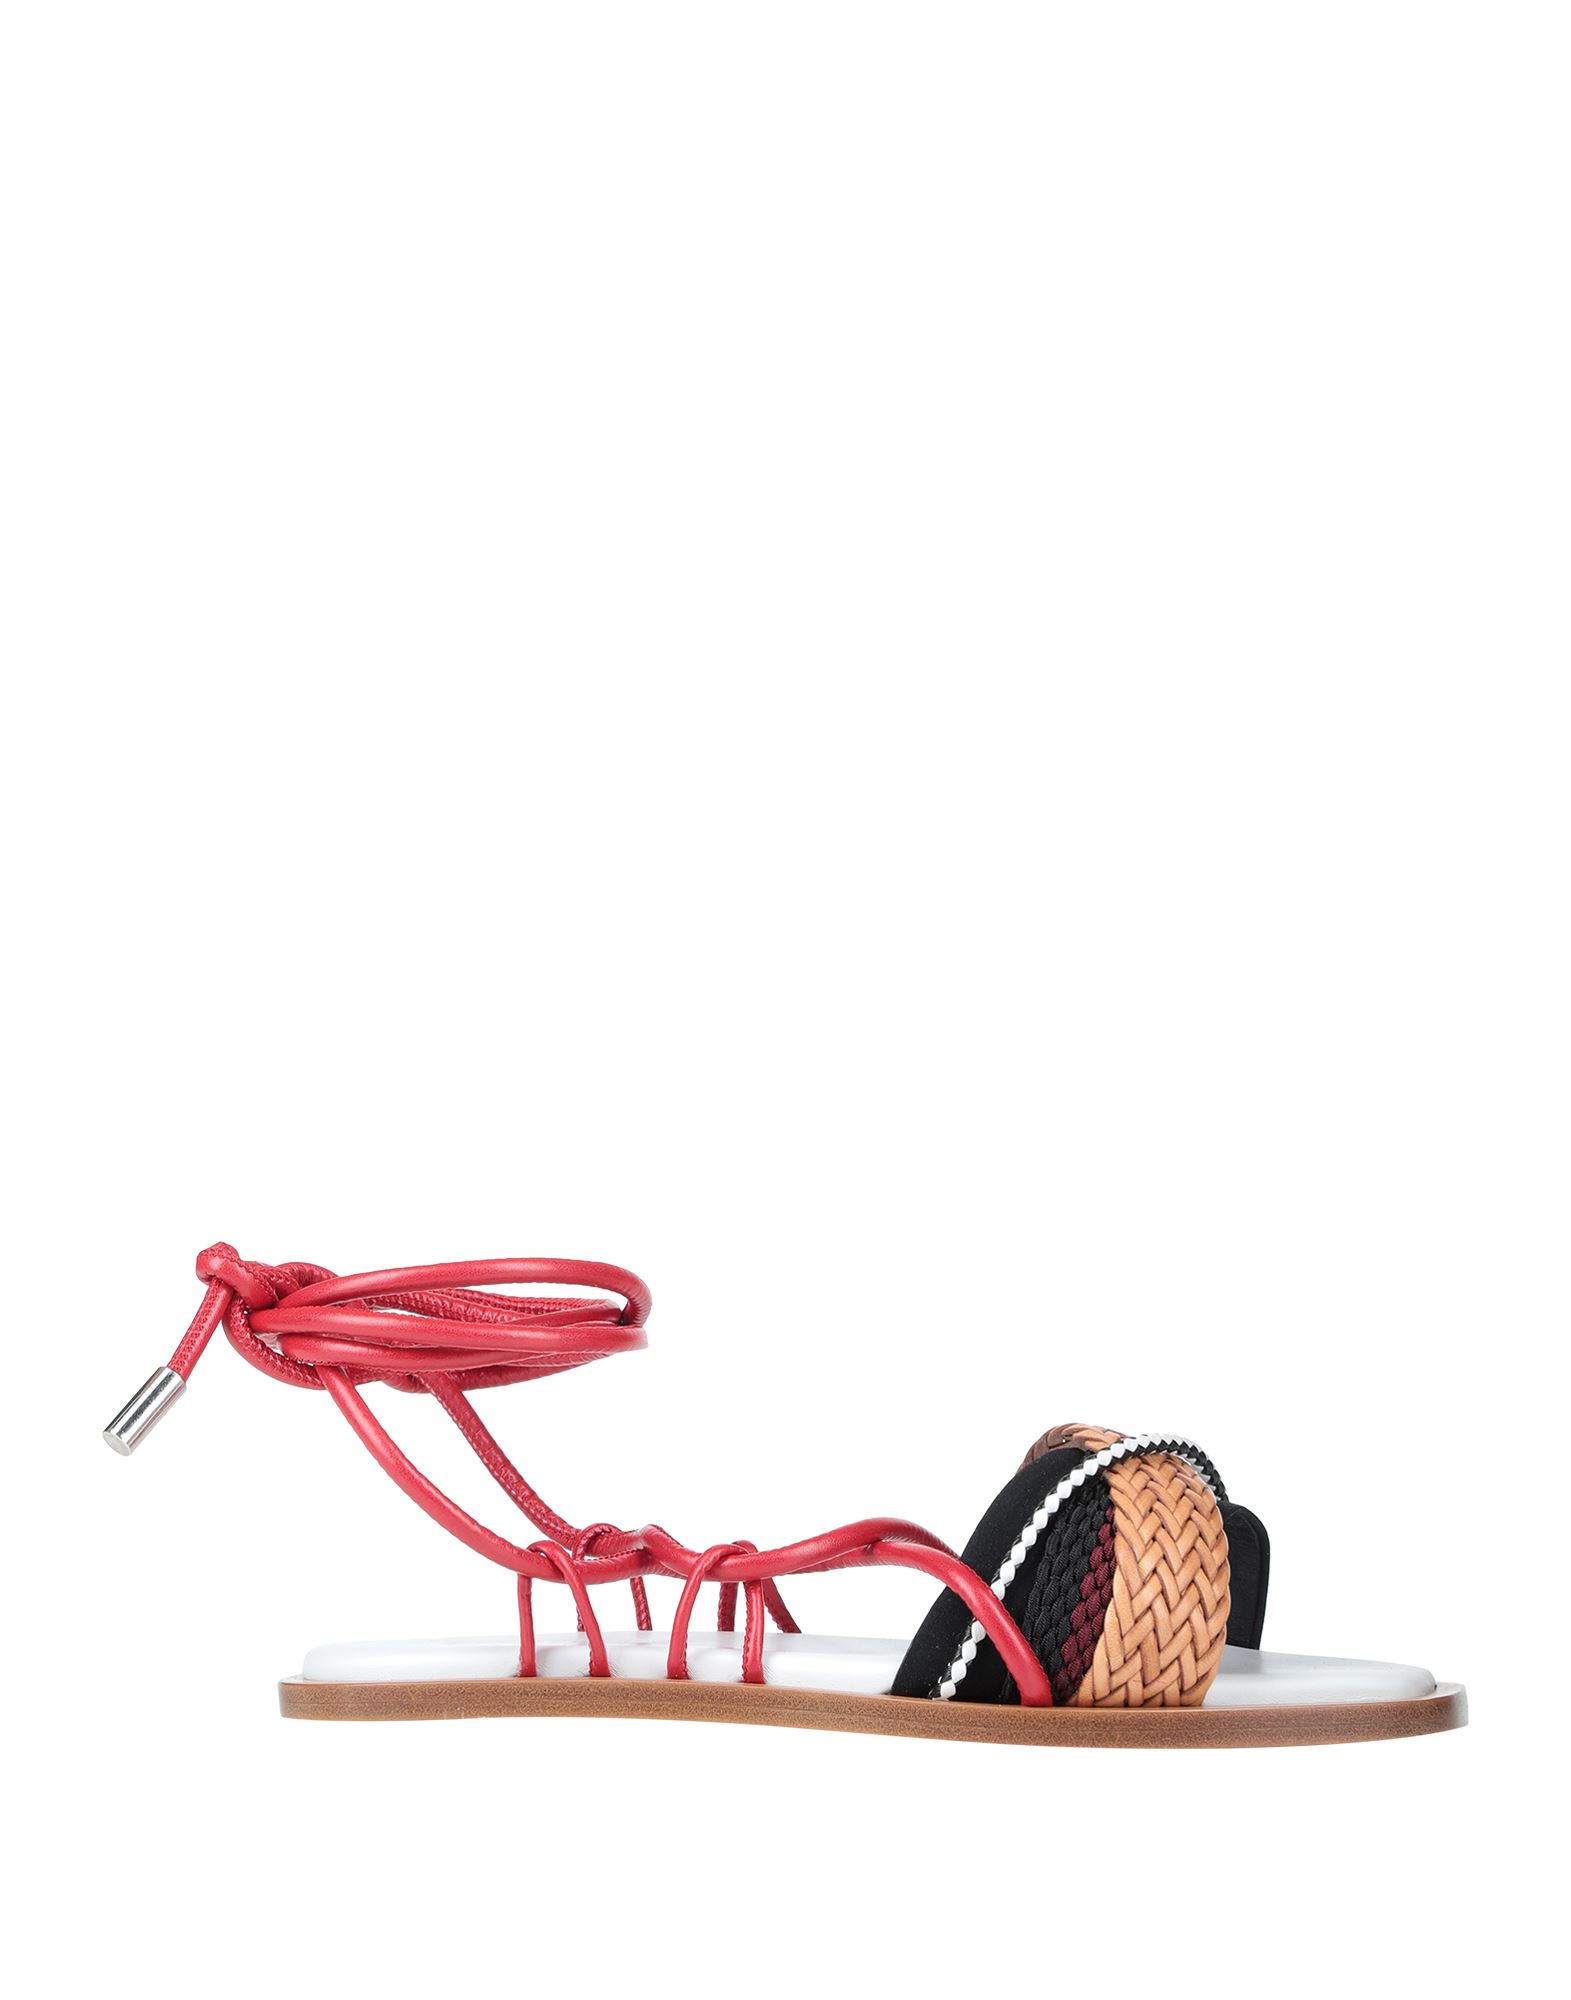 Sportmax Sandals In Apricot